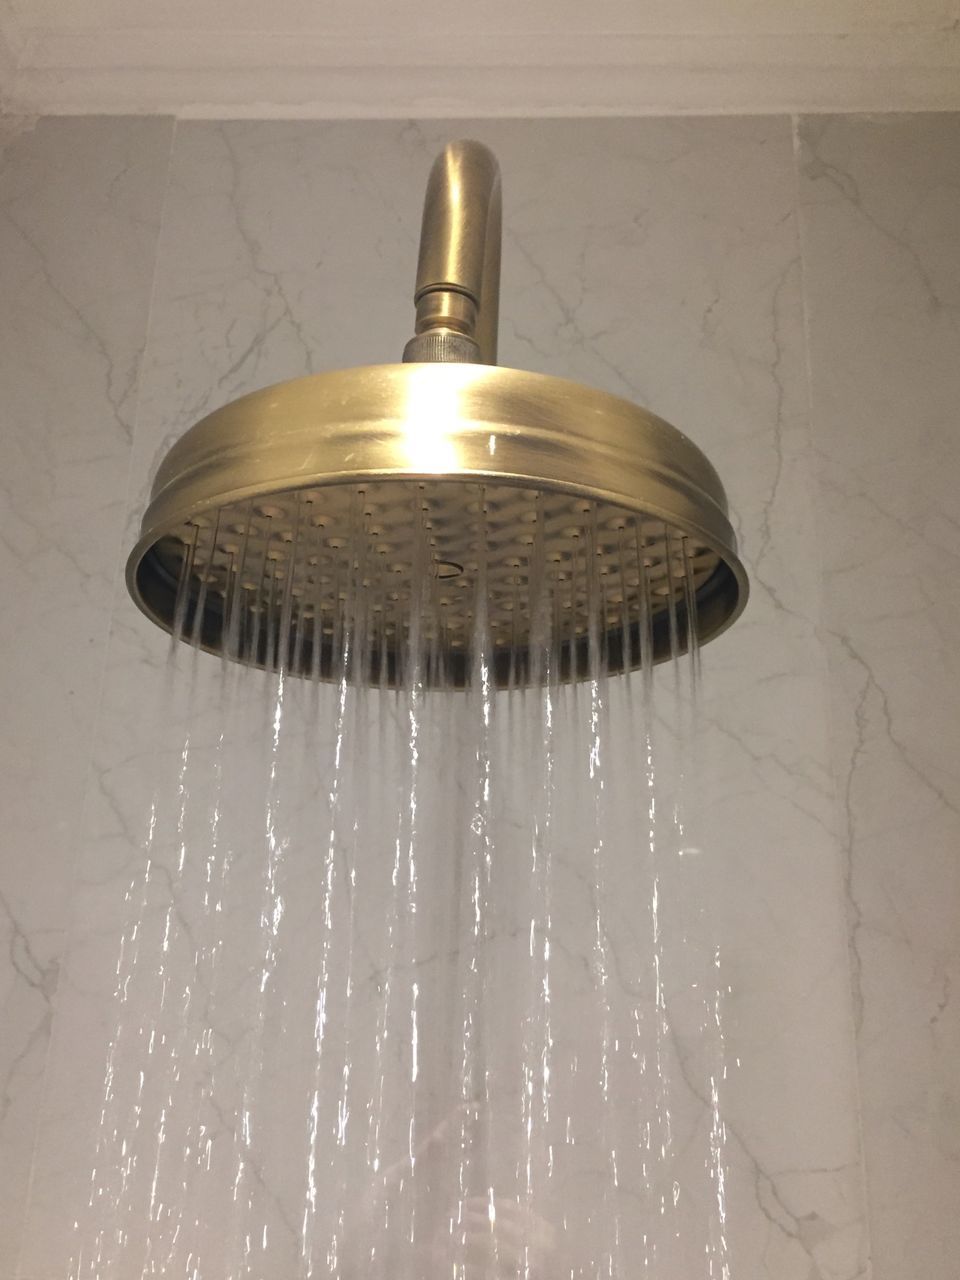 CLOSE-UP OF WATER SPLASHING IN BATHROOM